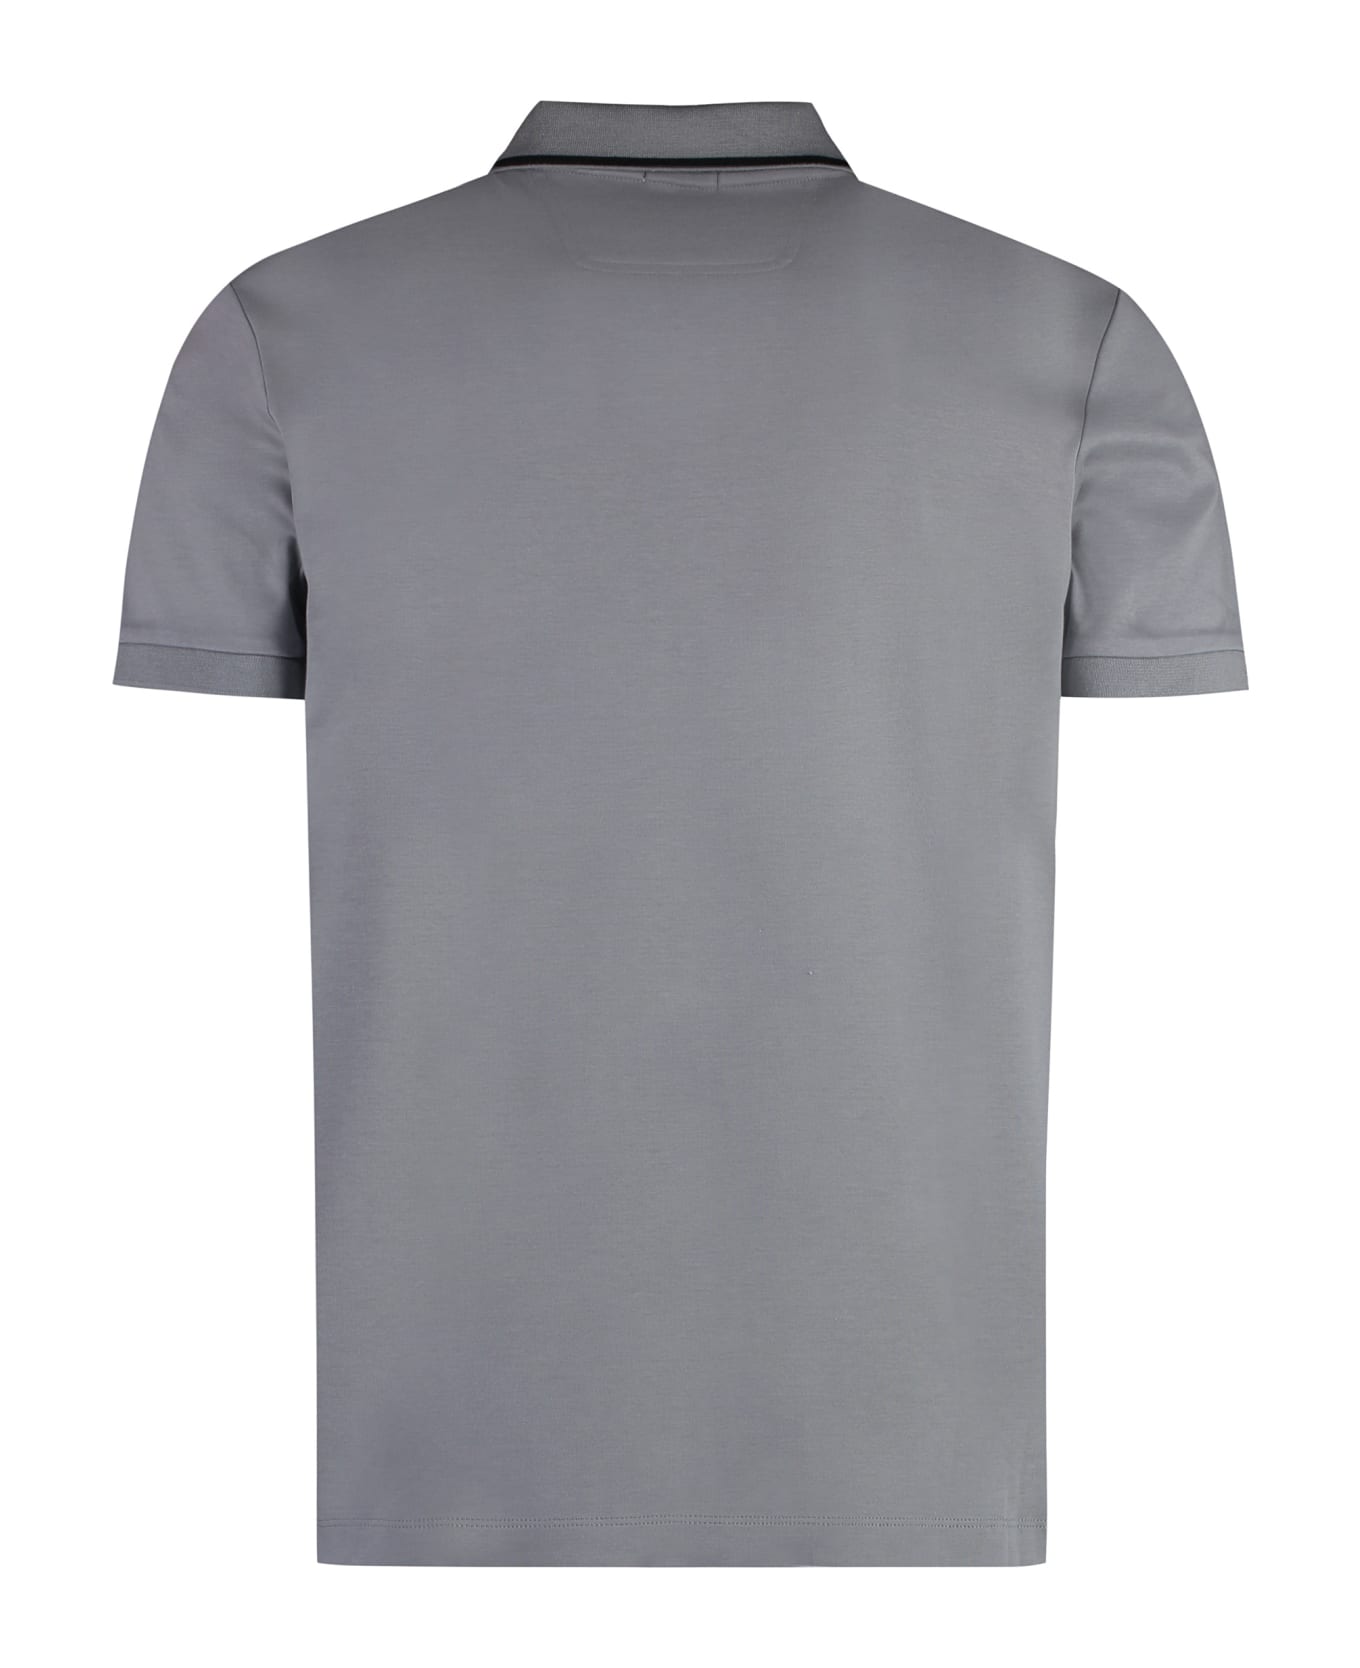 Hugo Boss Short Sleeve Cotton Polo Shirt - GREY